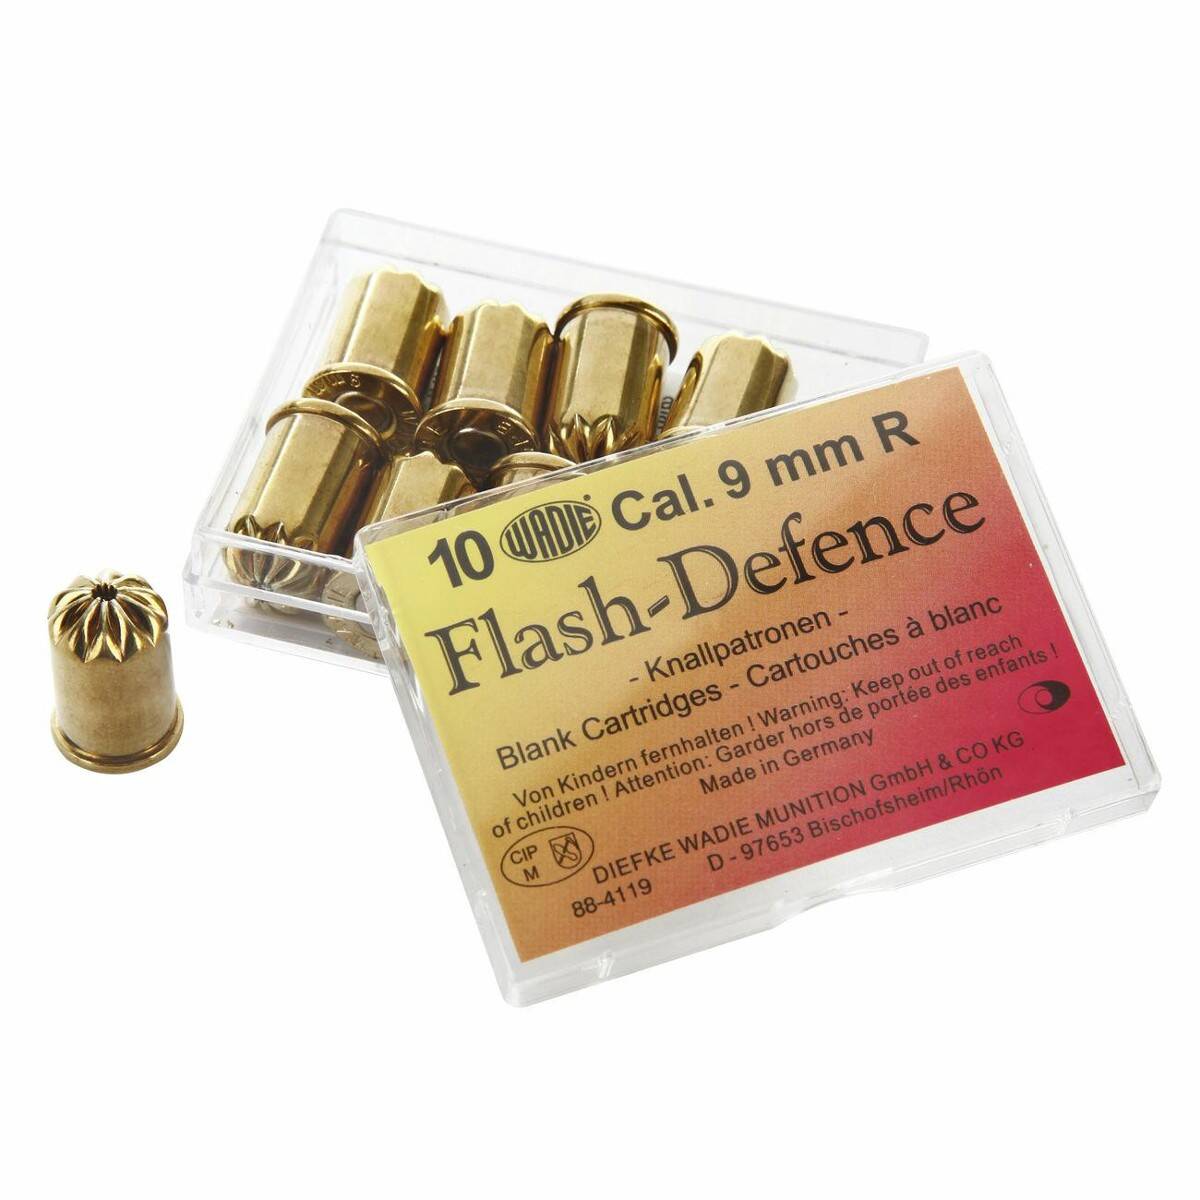 Amunicja hukowa WADIE 9mm R Flash Defenc